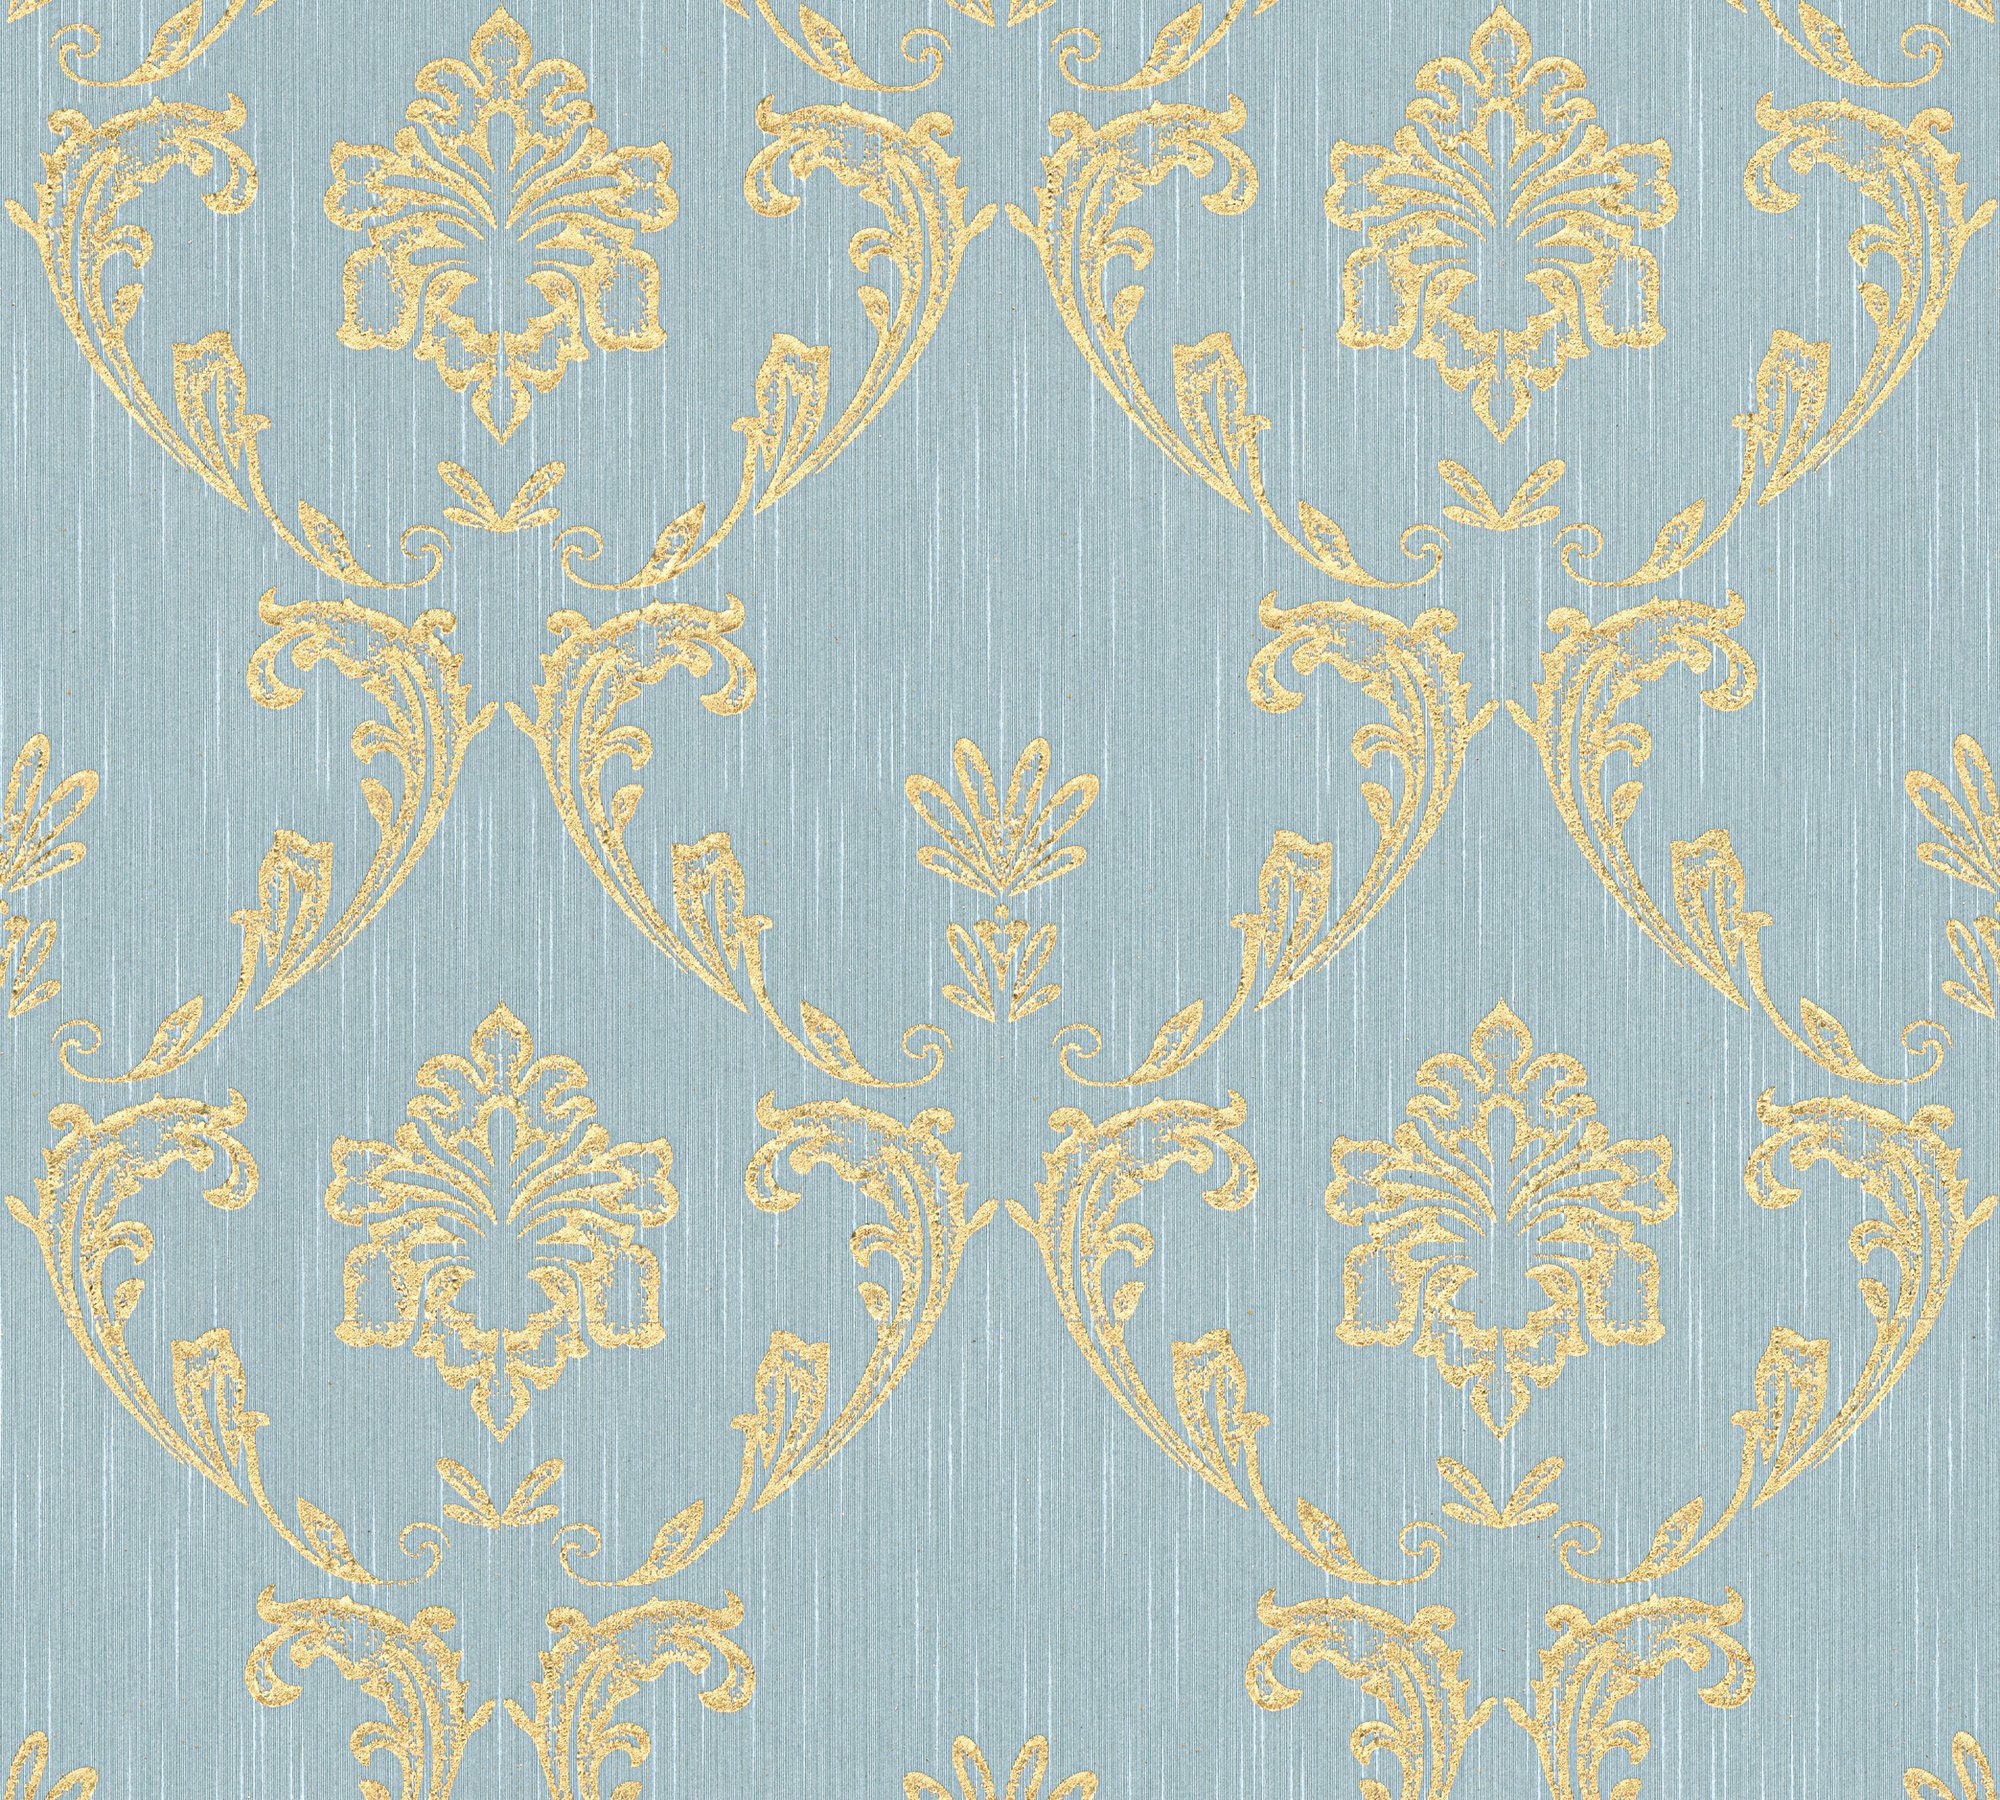 Paper Textiltapete Silk, Ornament A.S. Barock, Tapete matt, Barock gold/blau/grün Architects samtig, Metallic Création glänzend,